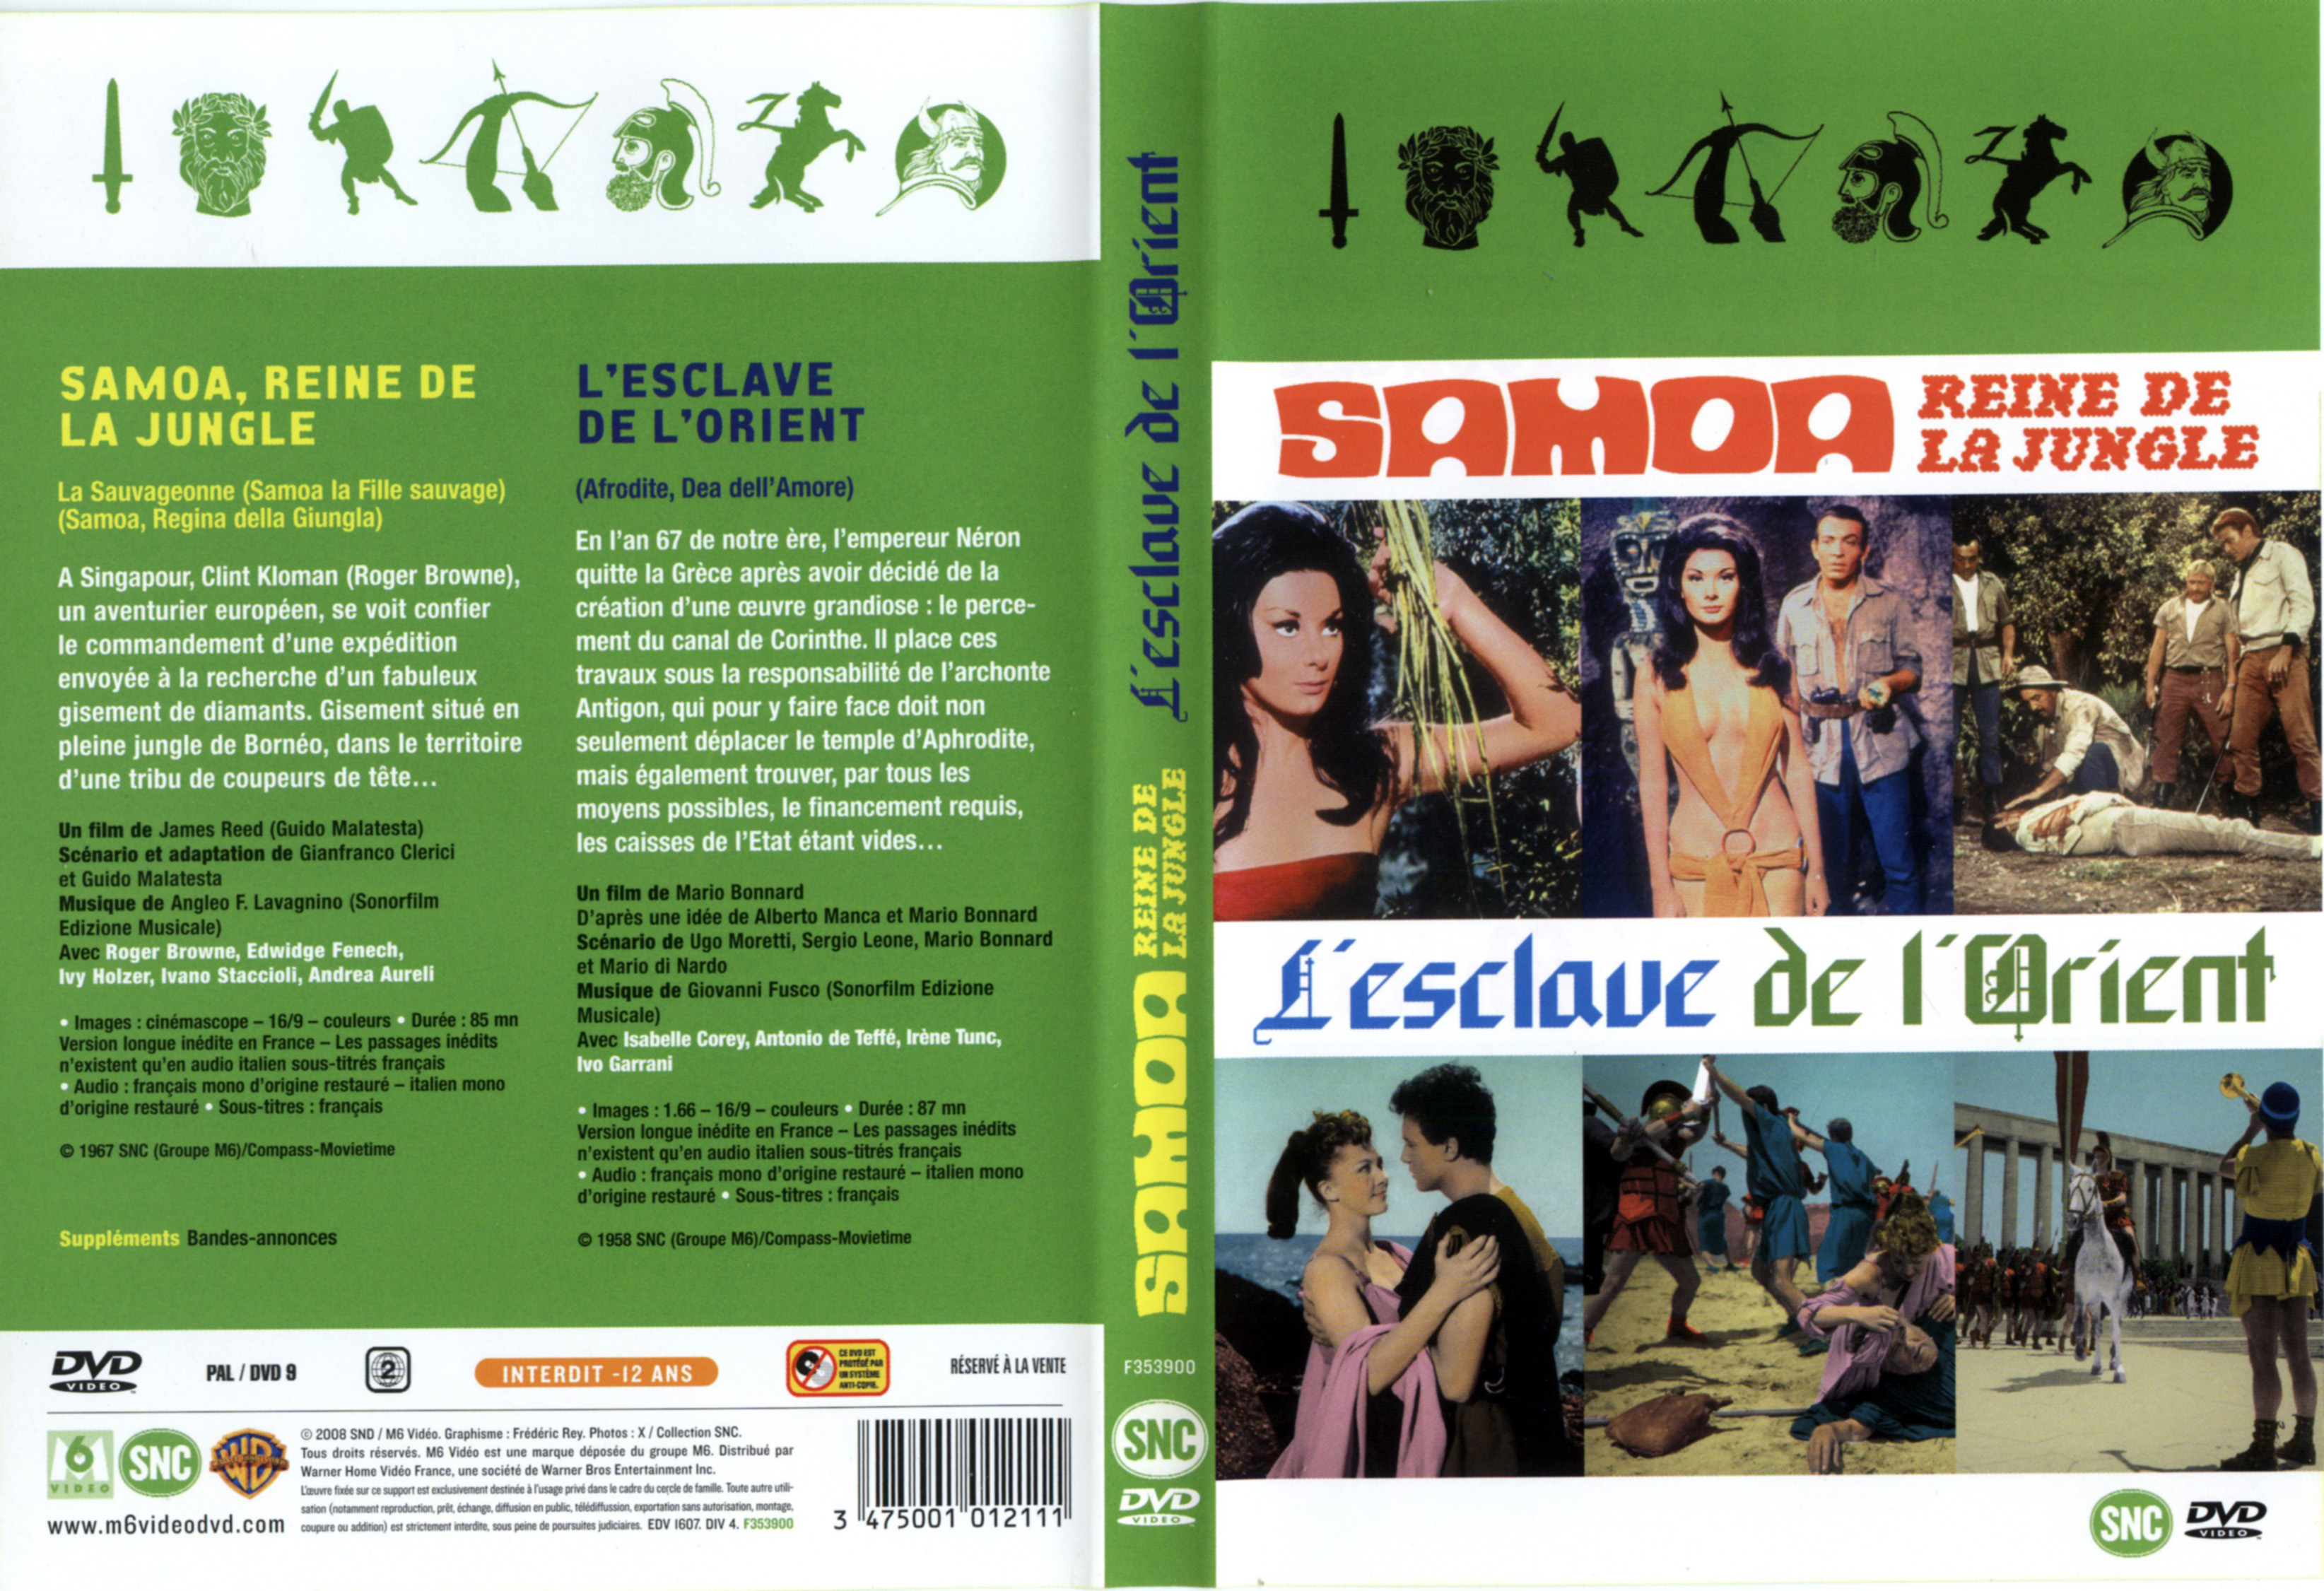 Jaquette DVD Samoa reine de la jungle + L